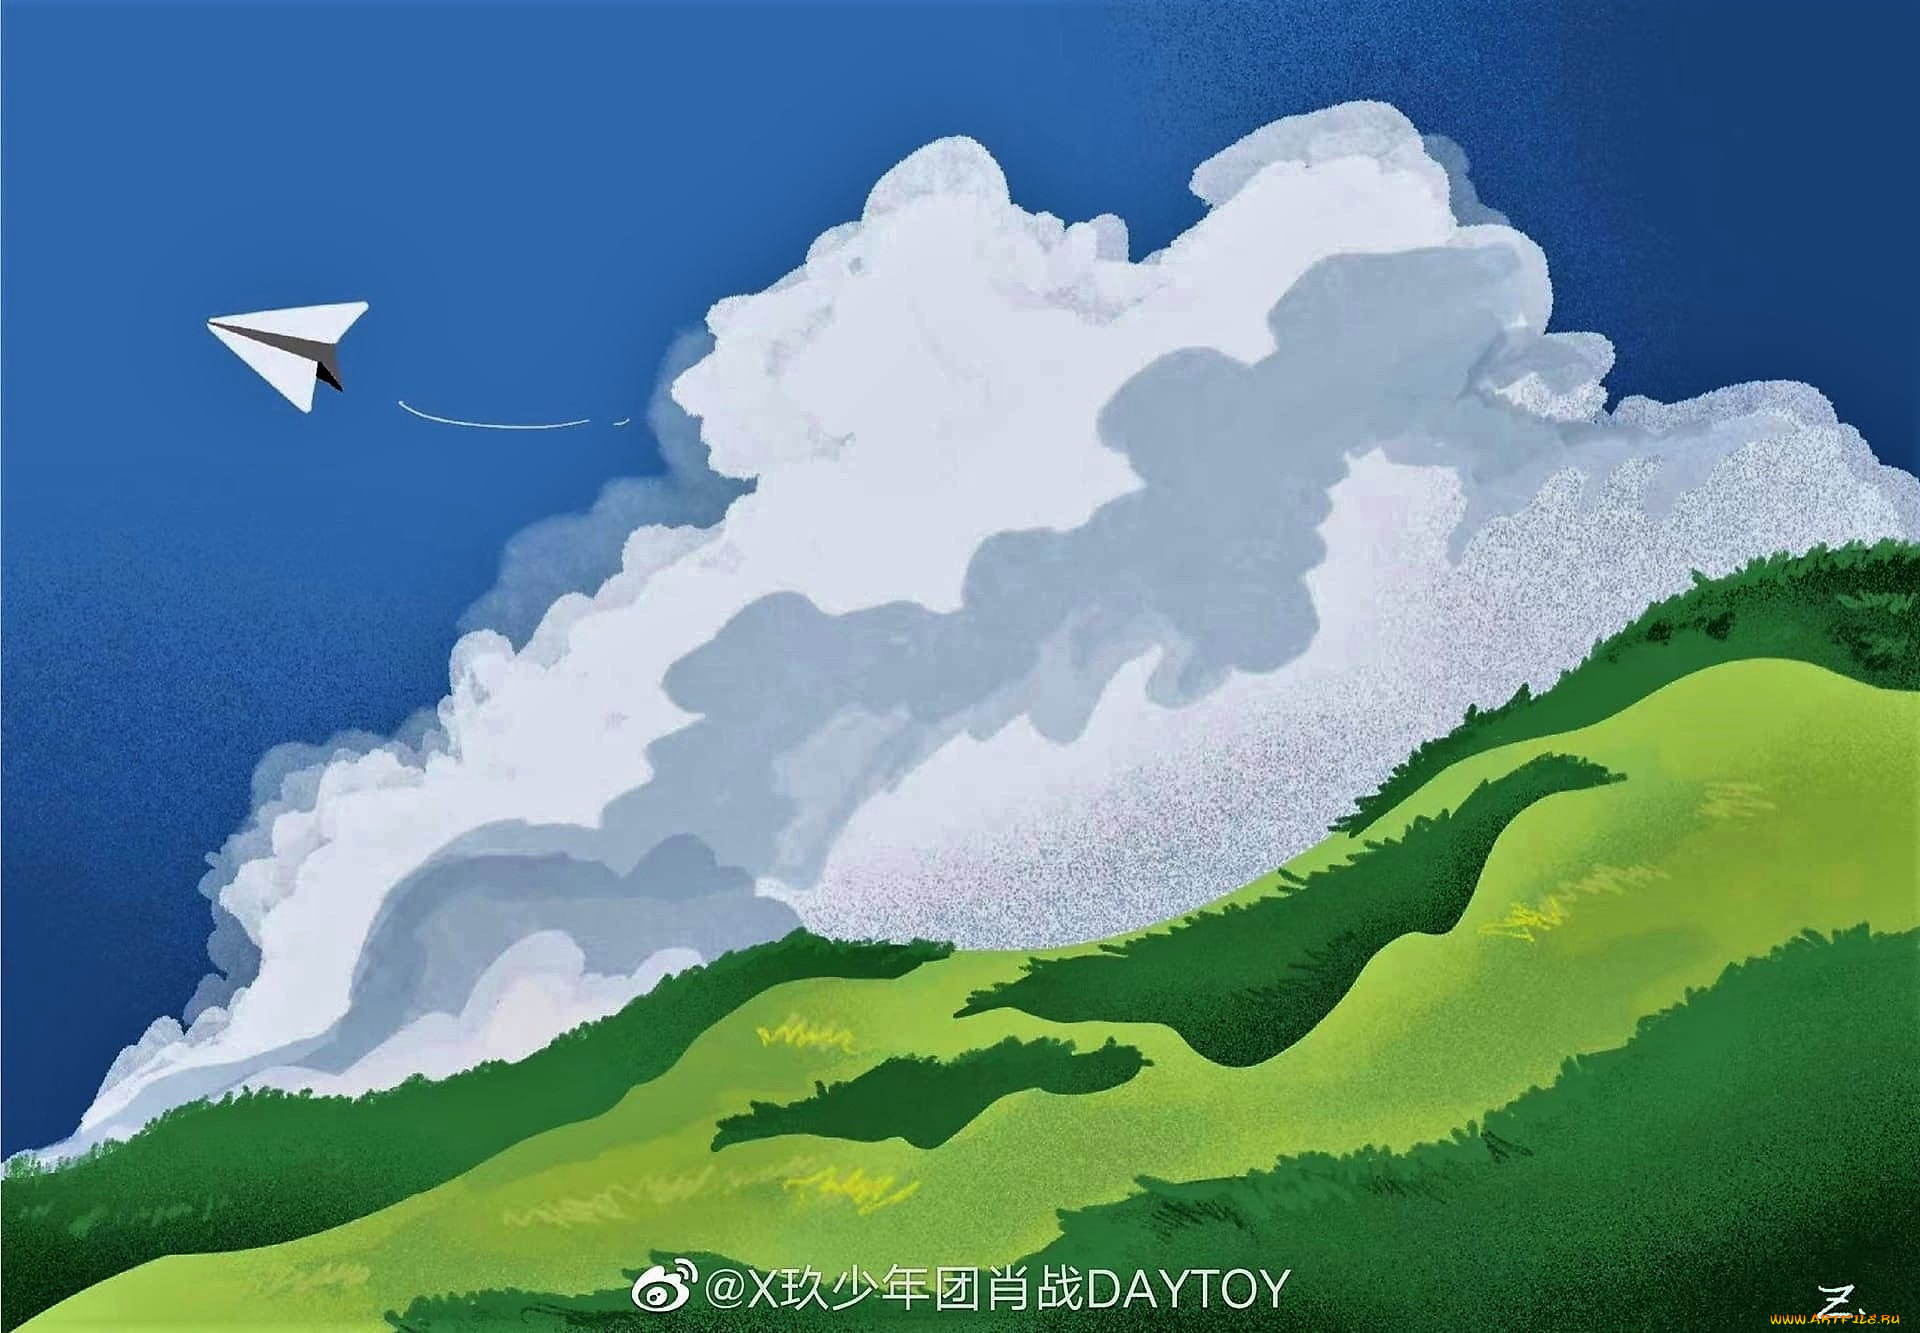 рисованное, природа, самолетик, небо, облако, холм